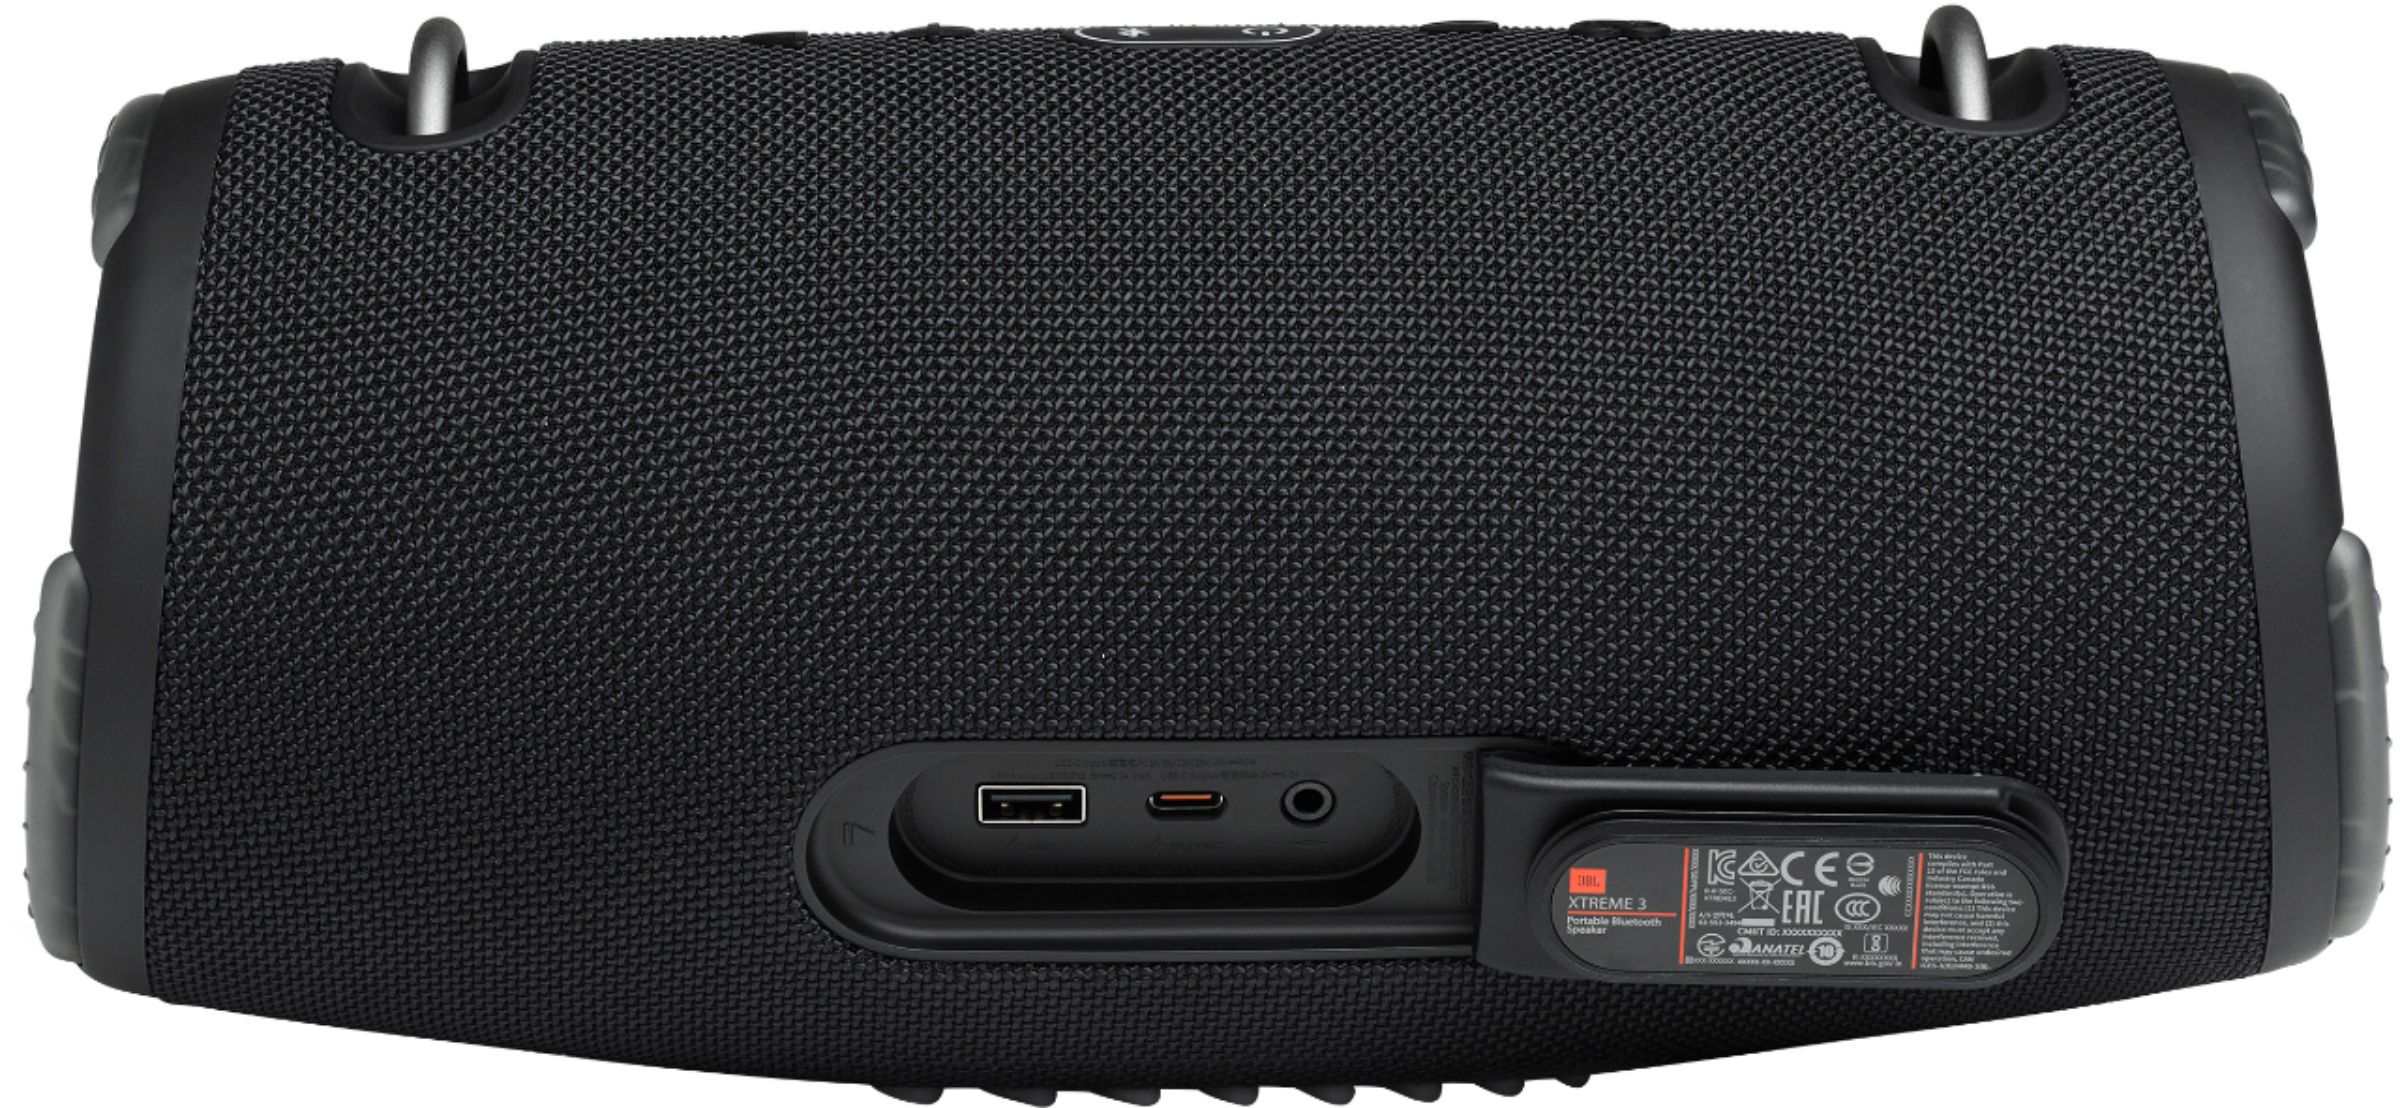 JBL XTREME3 Portable Bluetooth Speaker Black JBLXTREME3BLKAM - Best Buy